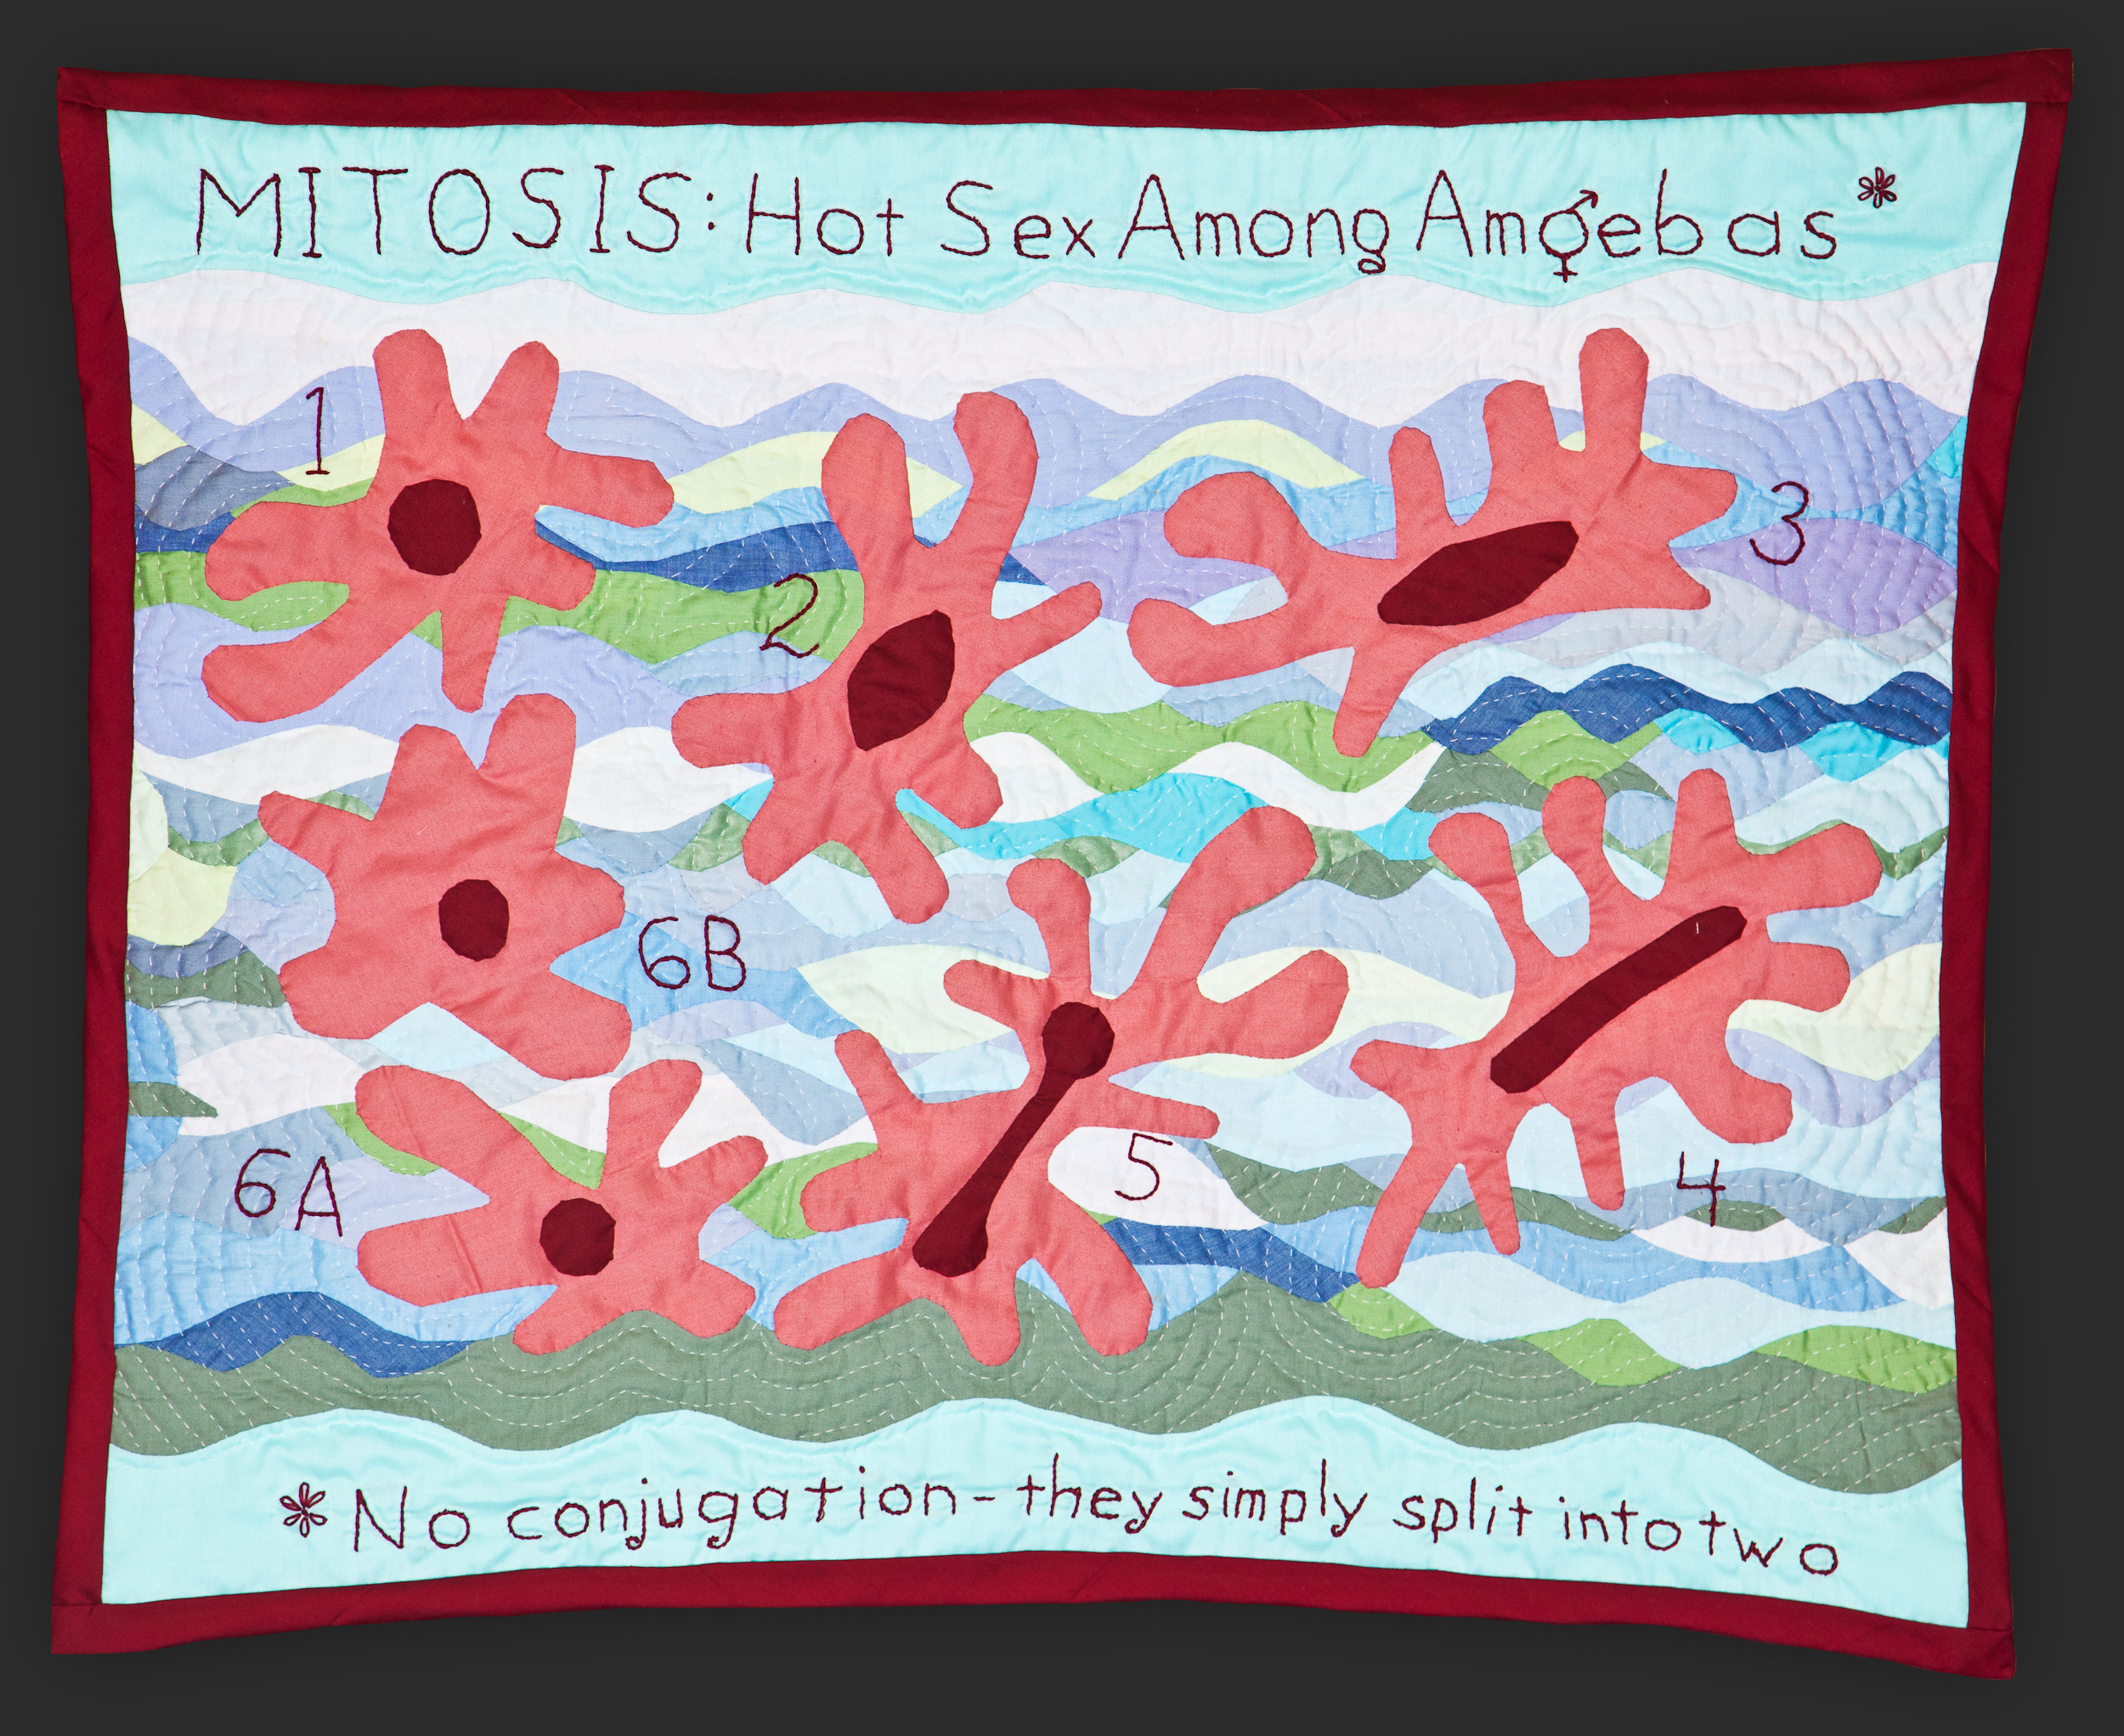 Mitosis: Hot Sex Among Amoebas detail